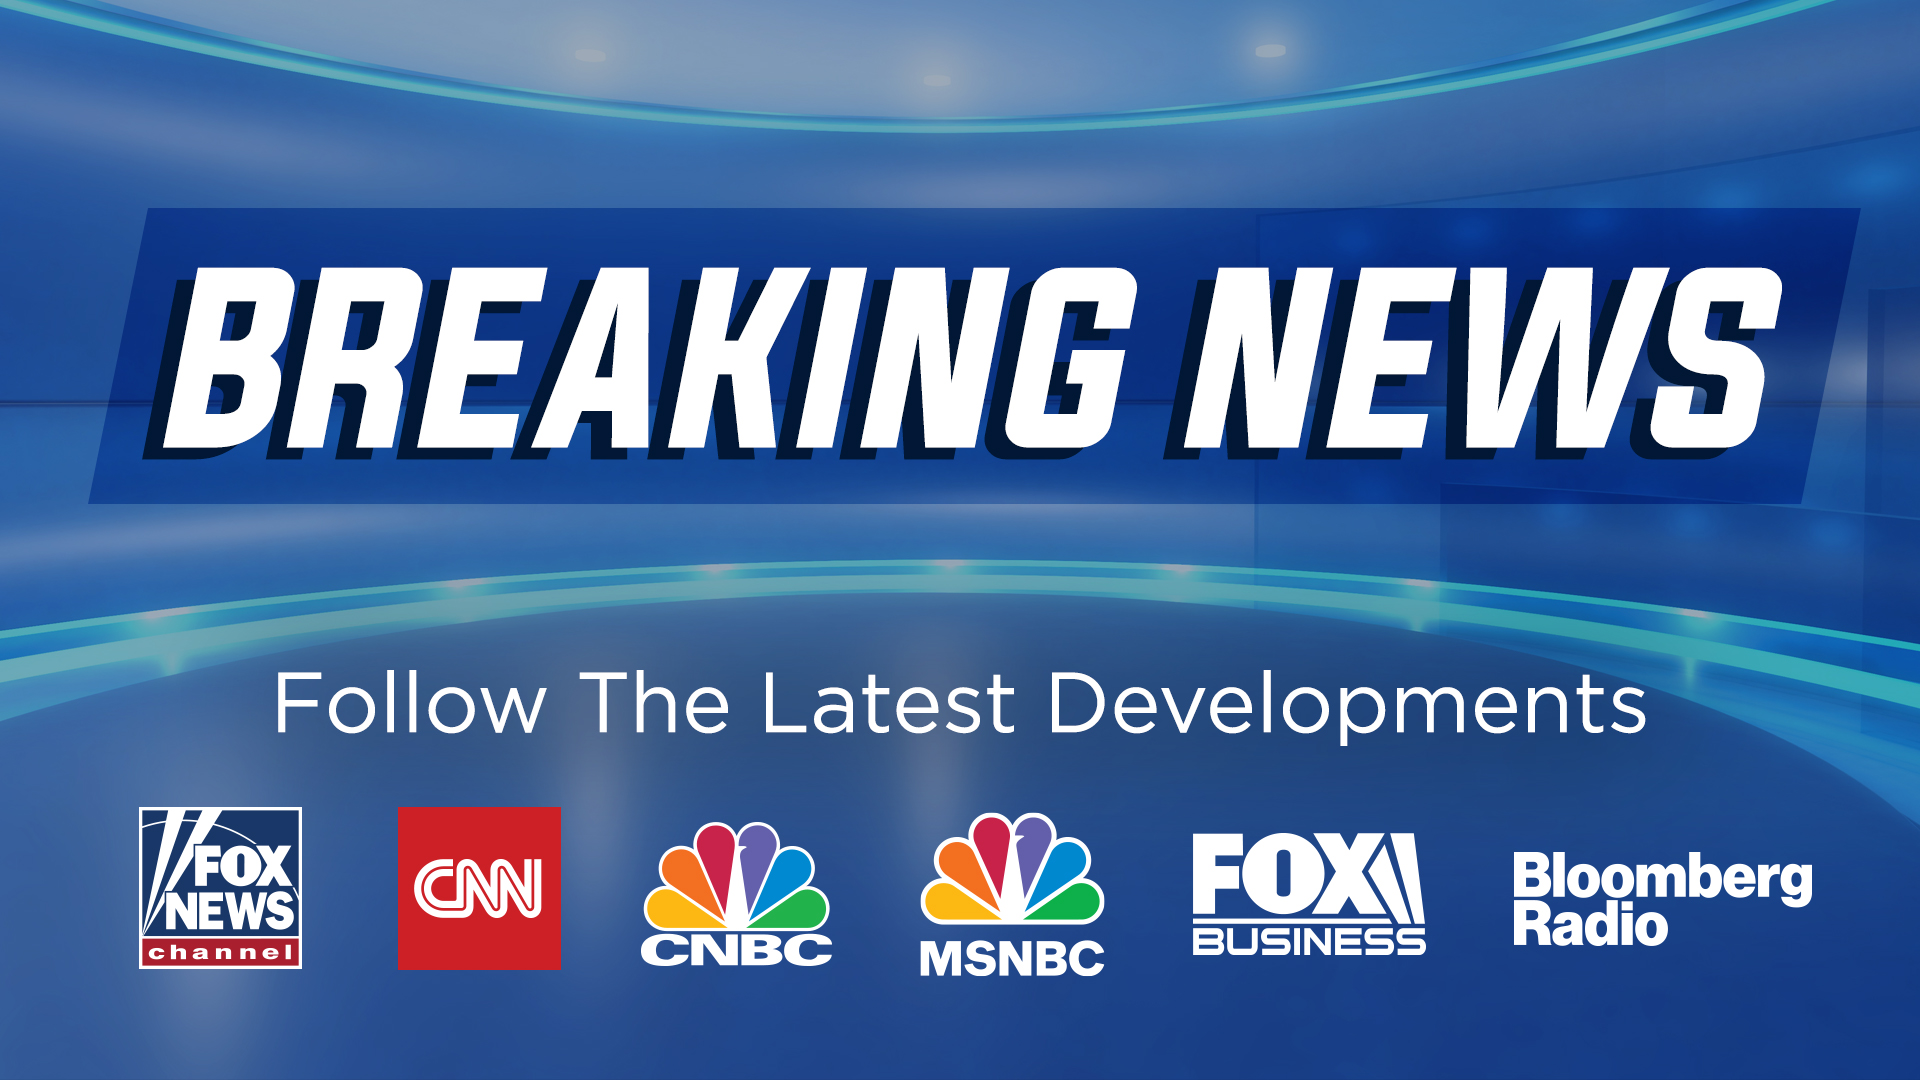 Breaking News Channels on SiriusXM - FOX News, CNN, MSNBC, CNBC, Fox Business, Bloomberg Radio